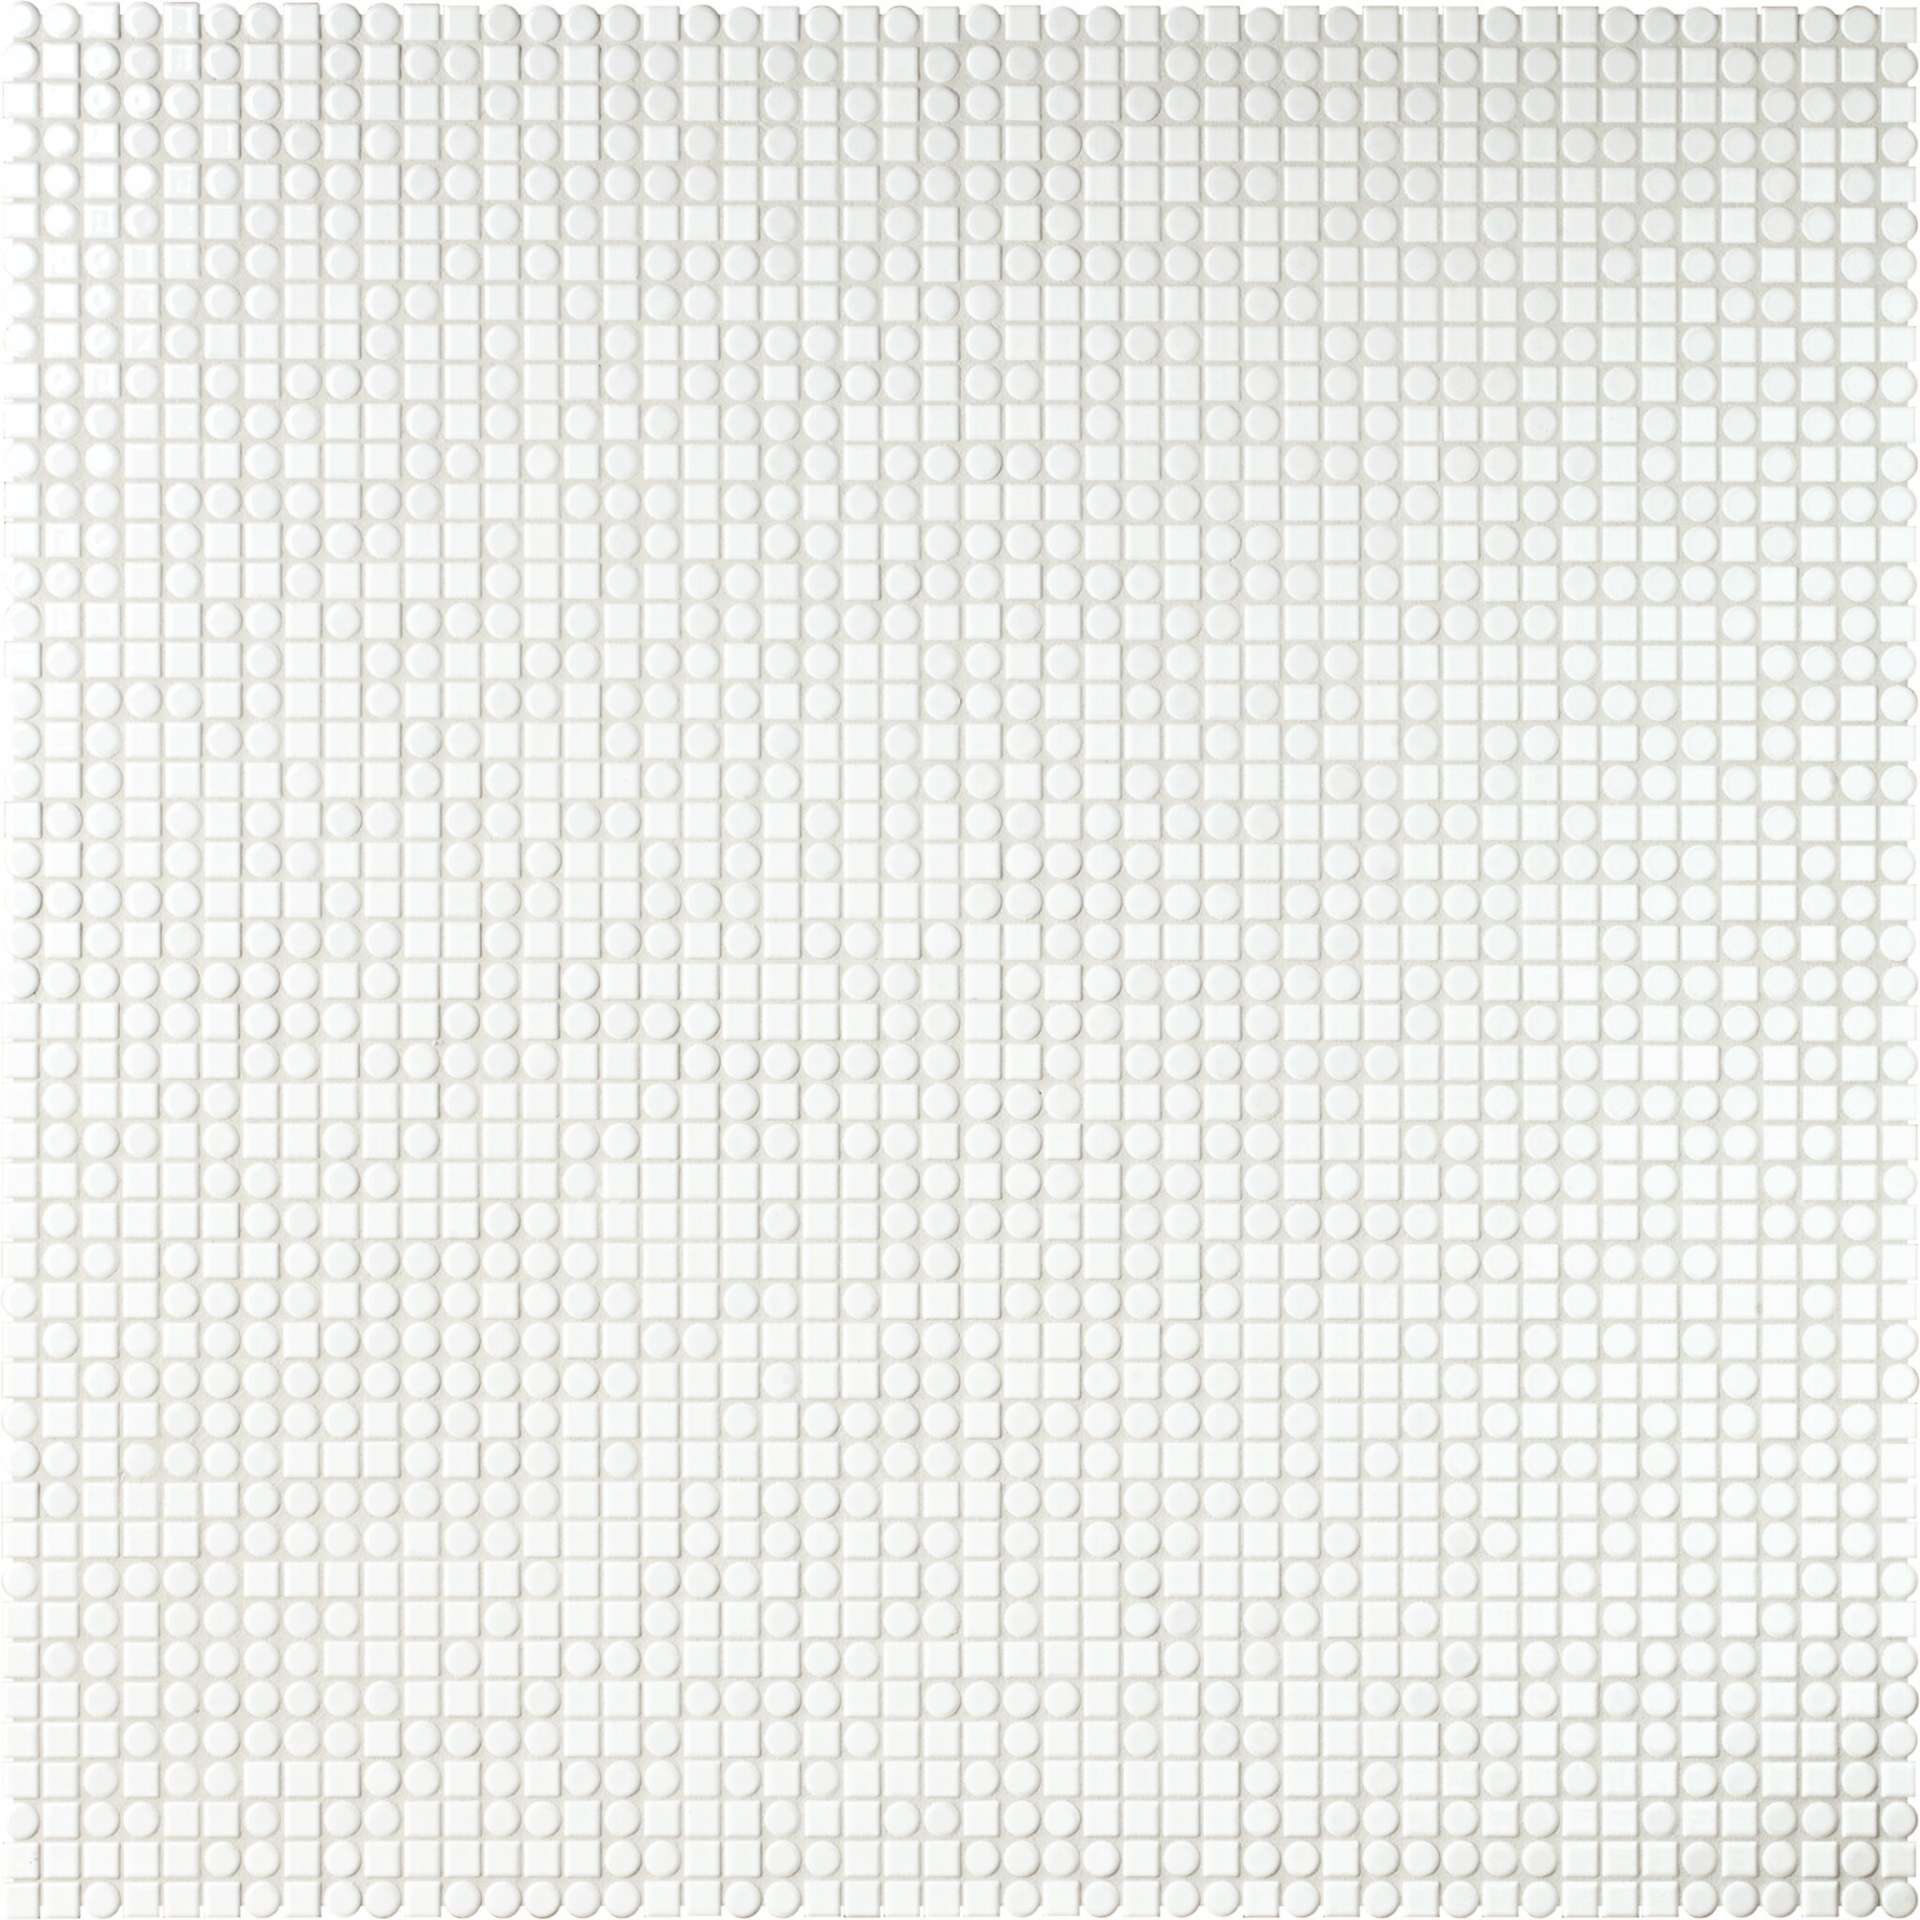 Мозаика Jasba Loop Arktiswei 40052H-44, цвет белый, поверхность глянцевая, круг и овал, 632x632